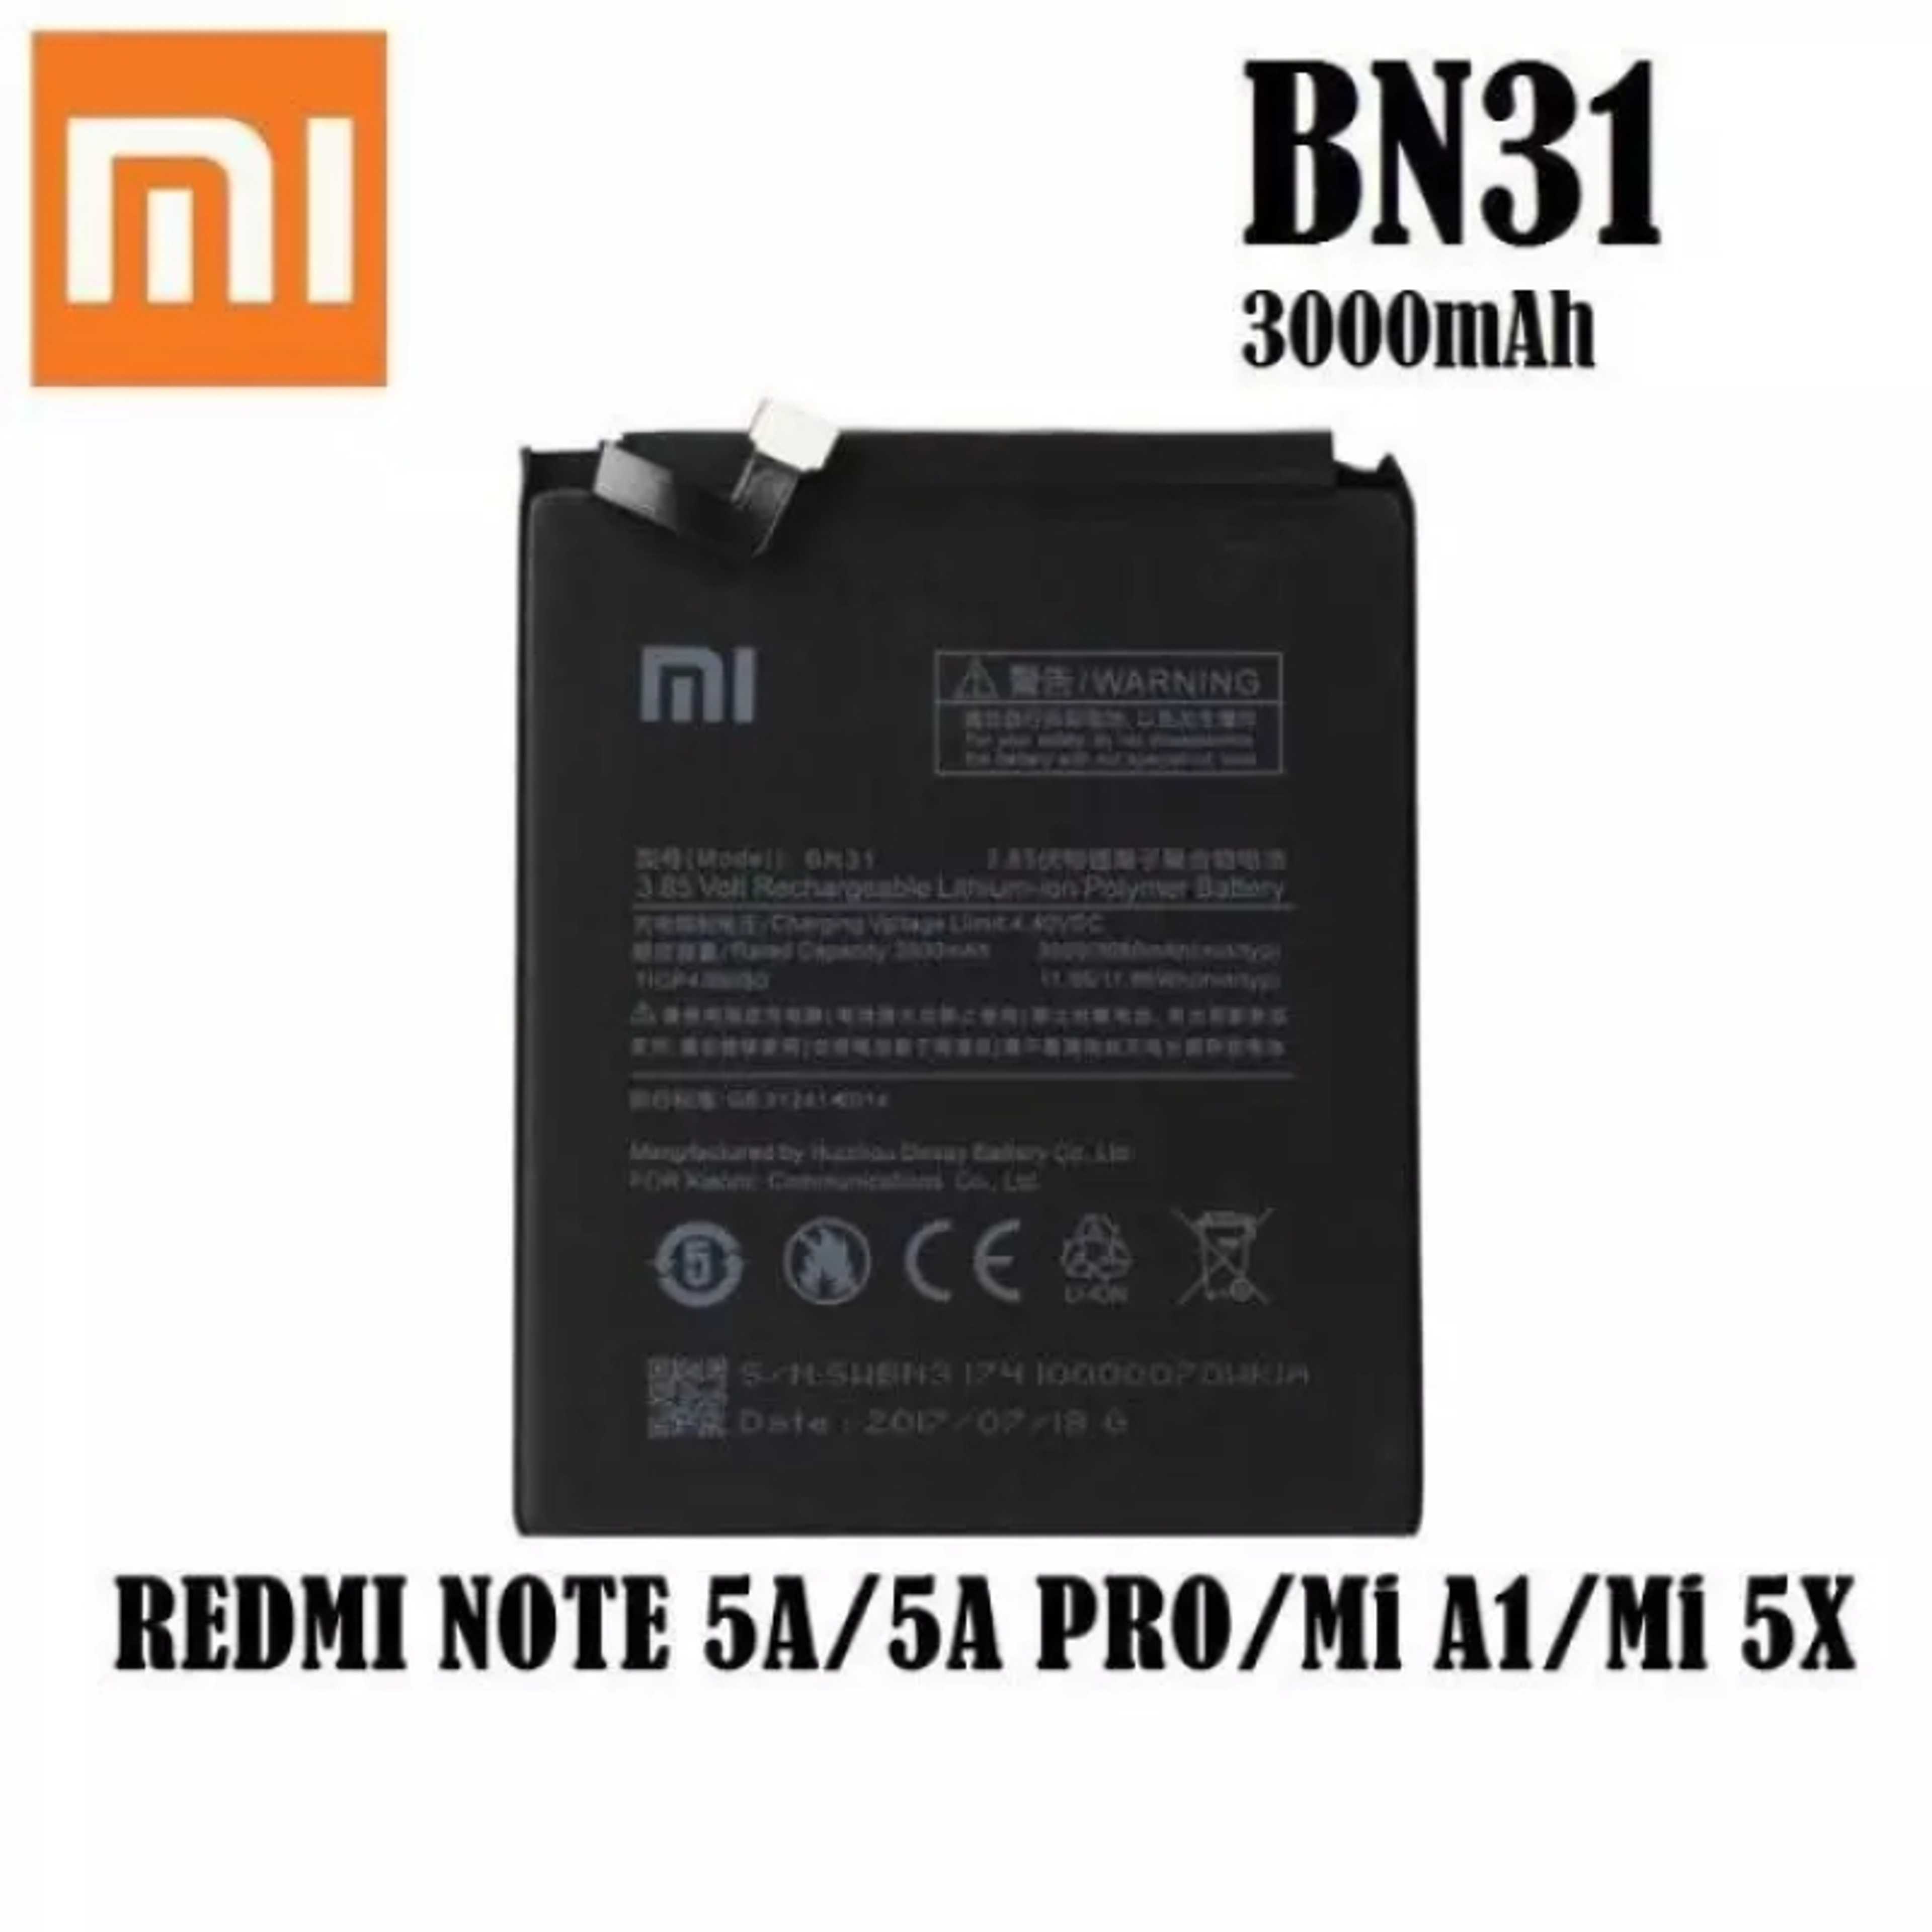 Bn31 Xiaomi Redmi S2 / Mi 5X / Mi A1 Original Battery / 3080 mAh